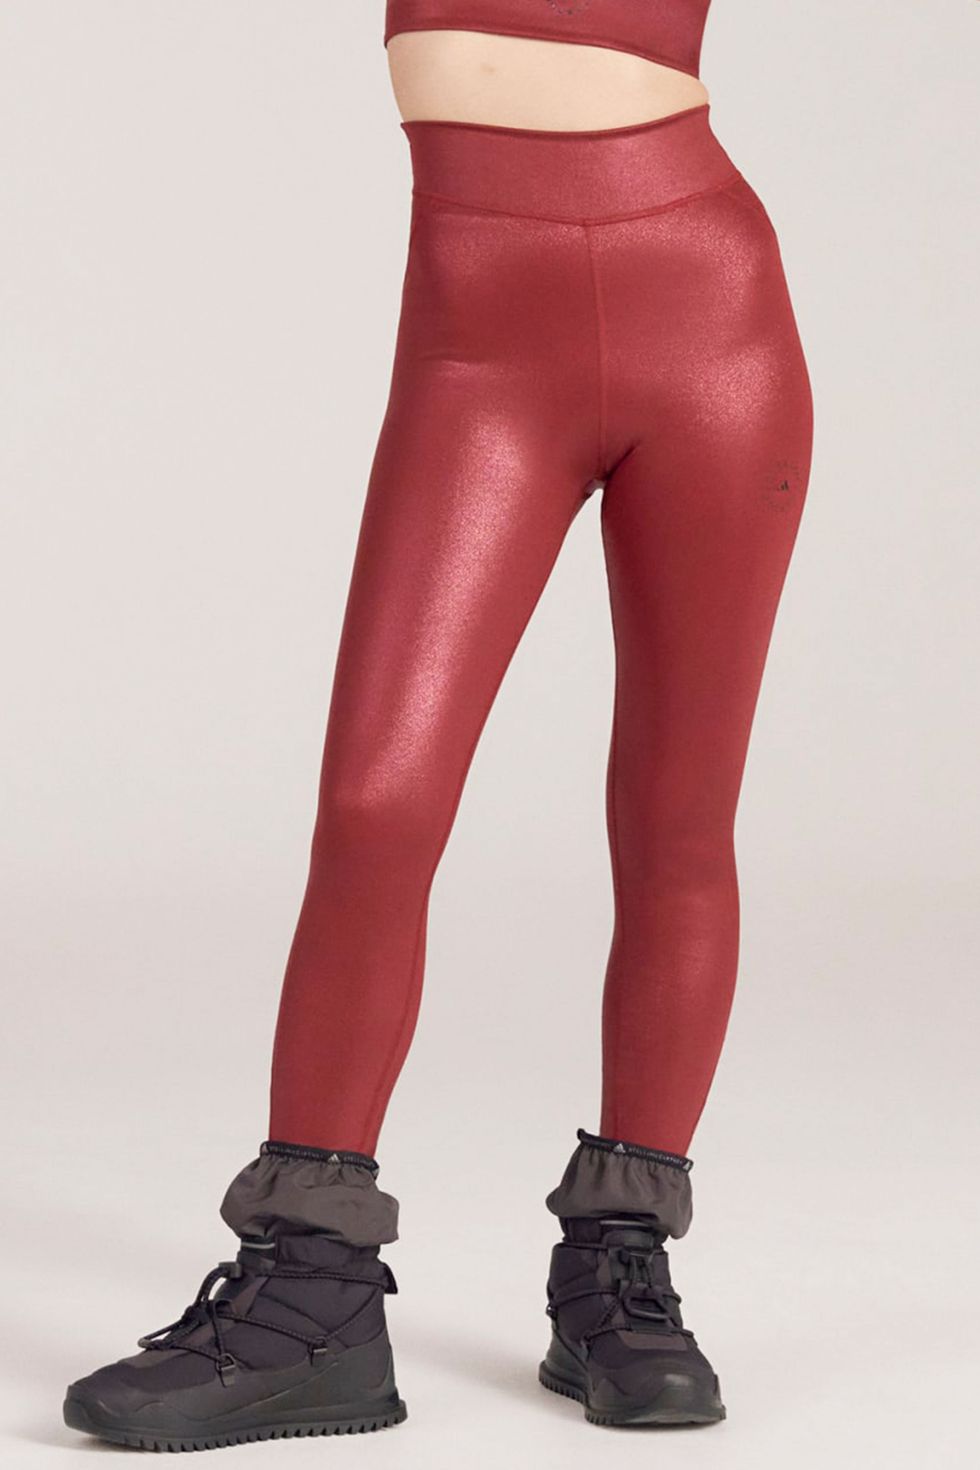 Ultra-Thin Pants Shiny Leggings Ultra-thin Leggings See Through Sexy Sheer  Shiny